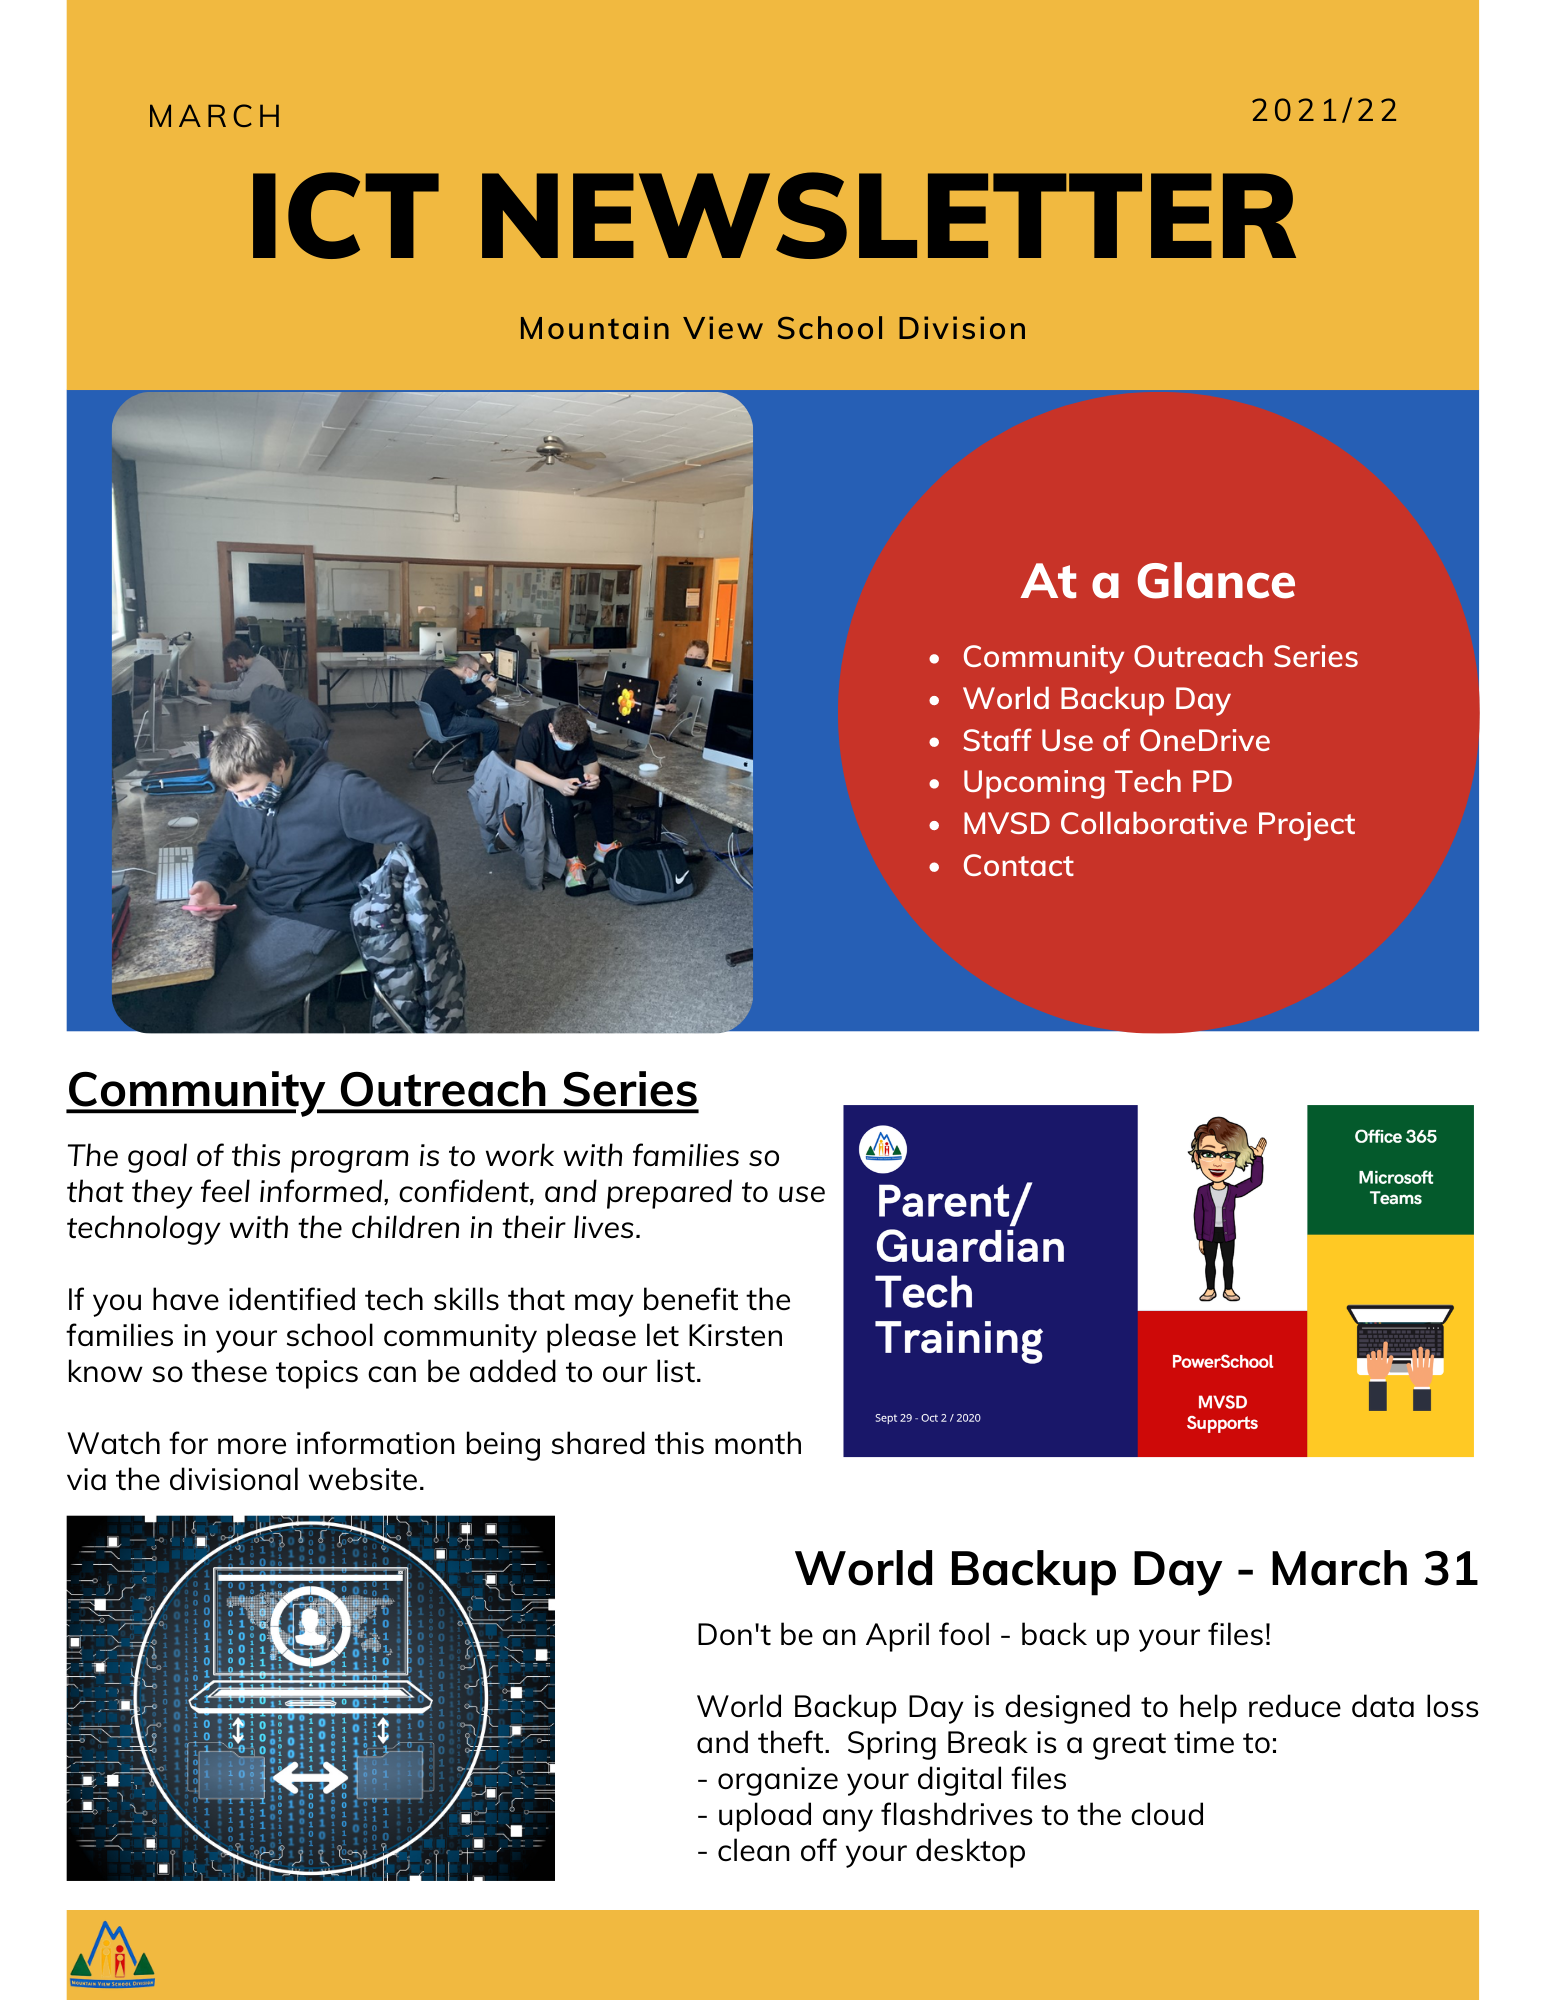 March ICT Newsletter